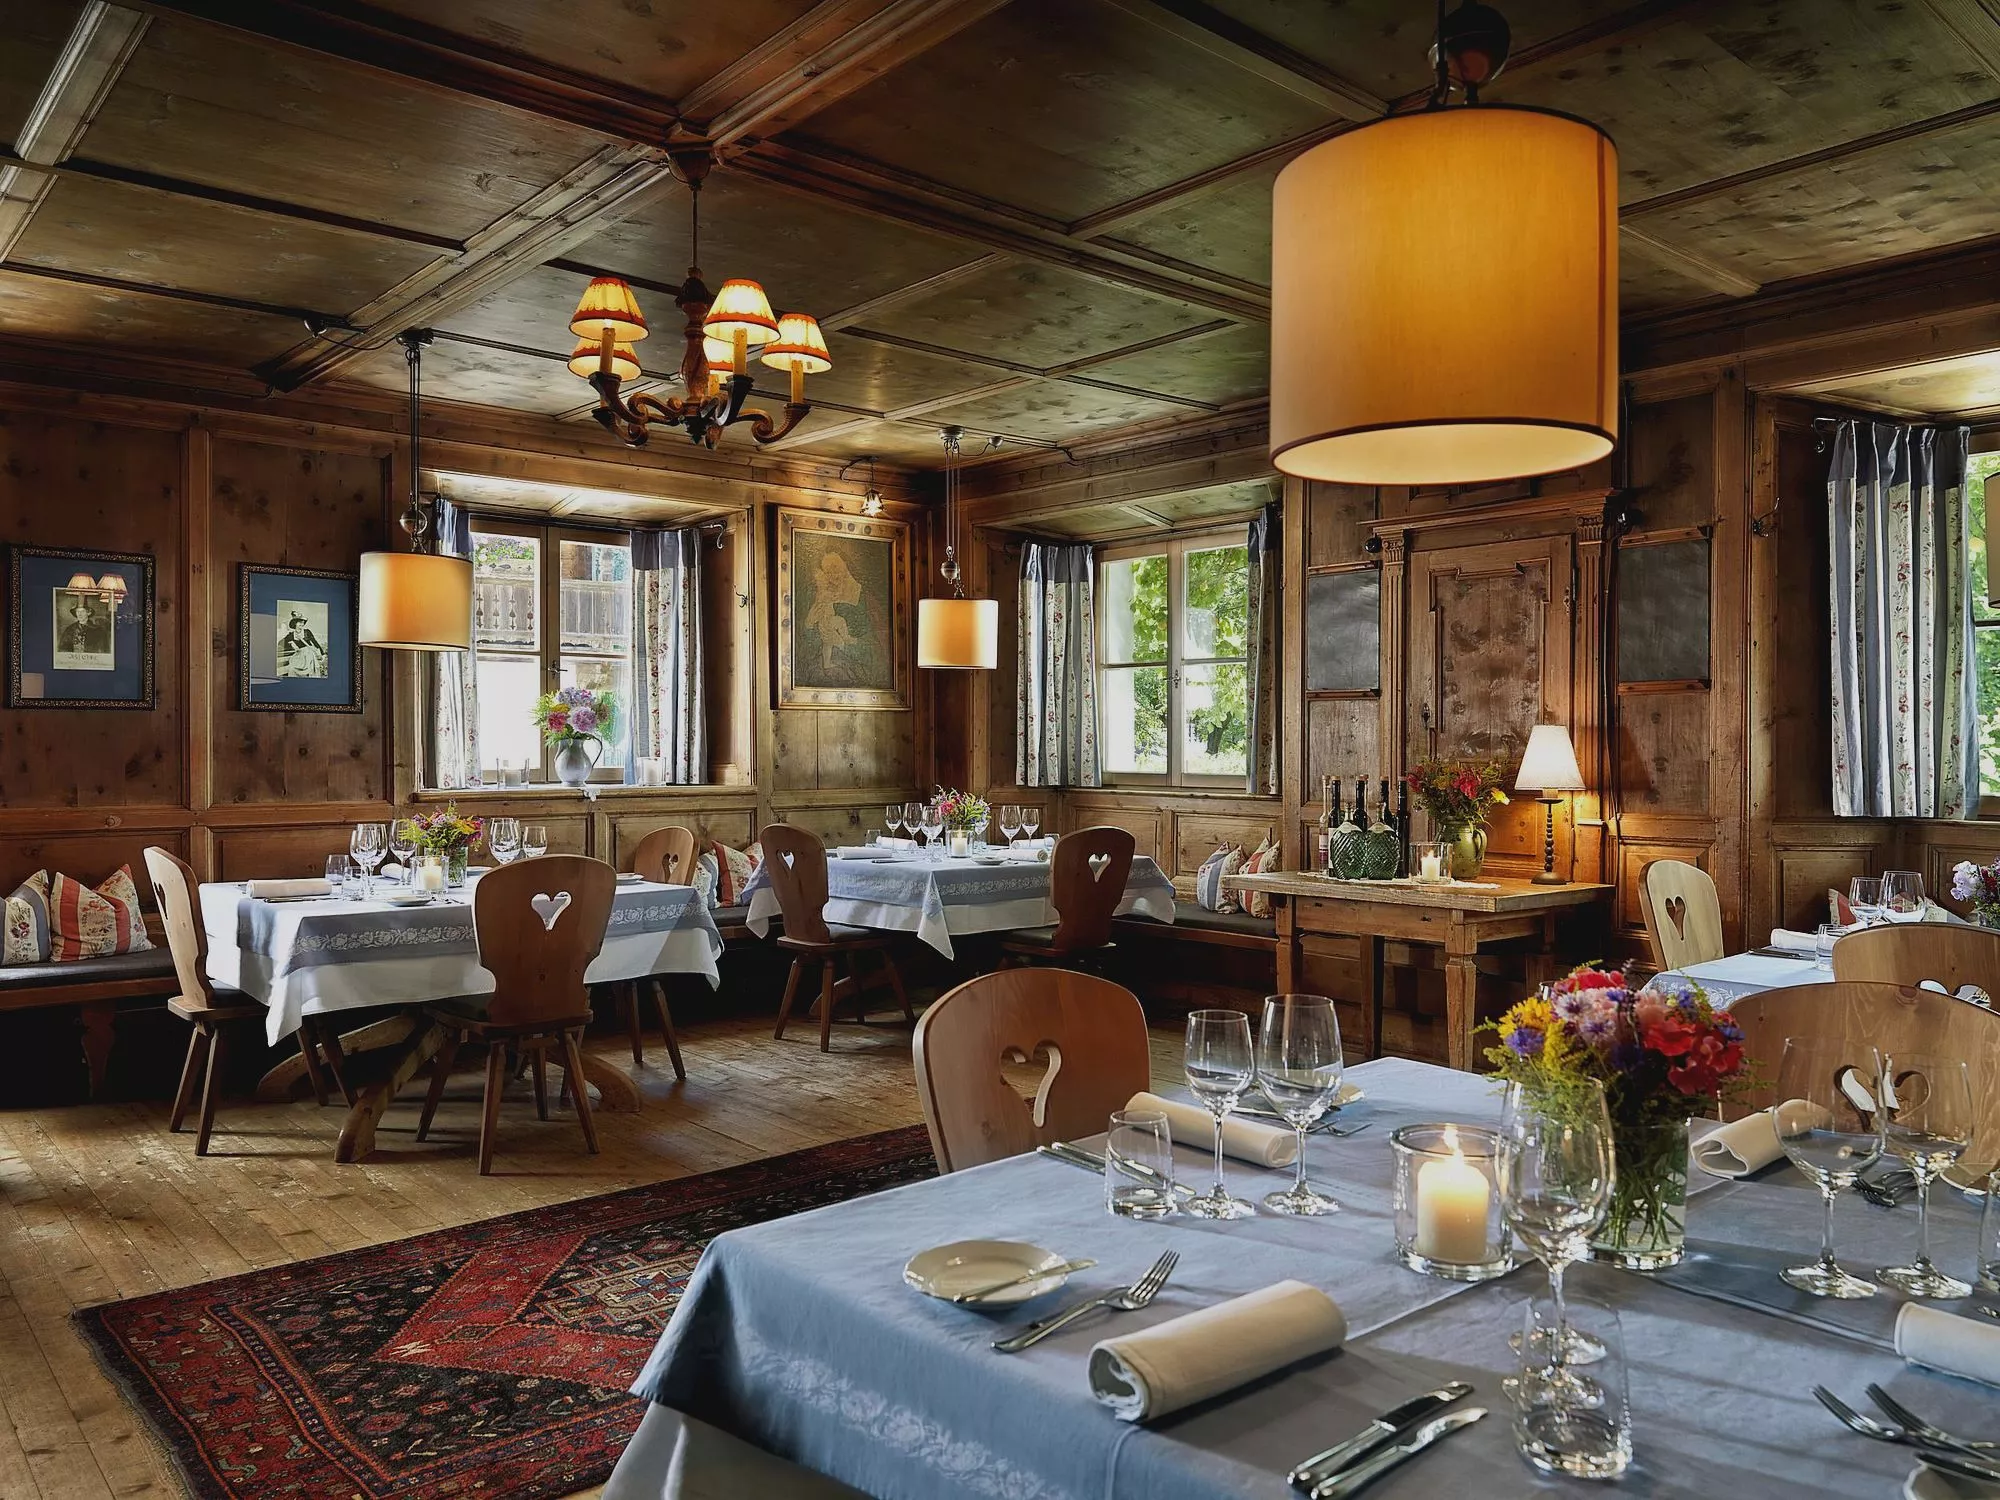 Beautifully set tables in the big dining room of historic Landgasthof Linde in Tyrol (c) Heli Hinkel